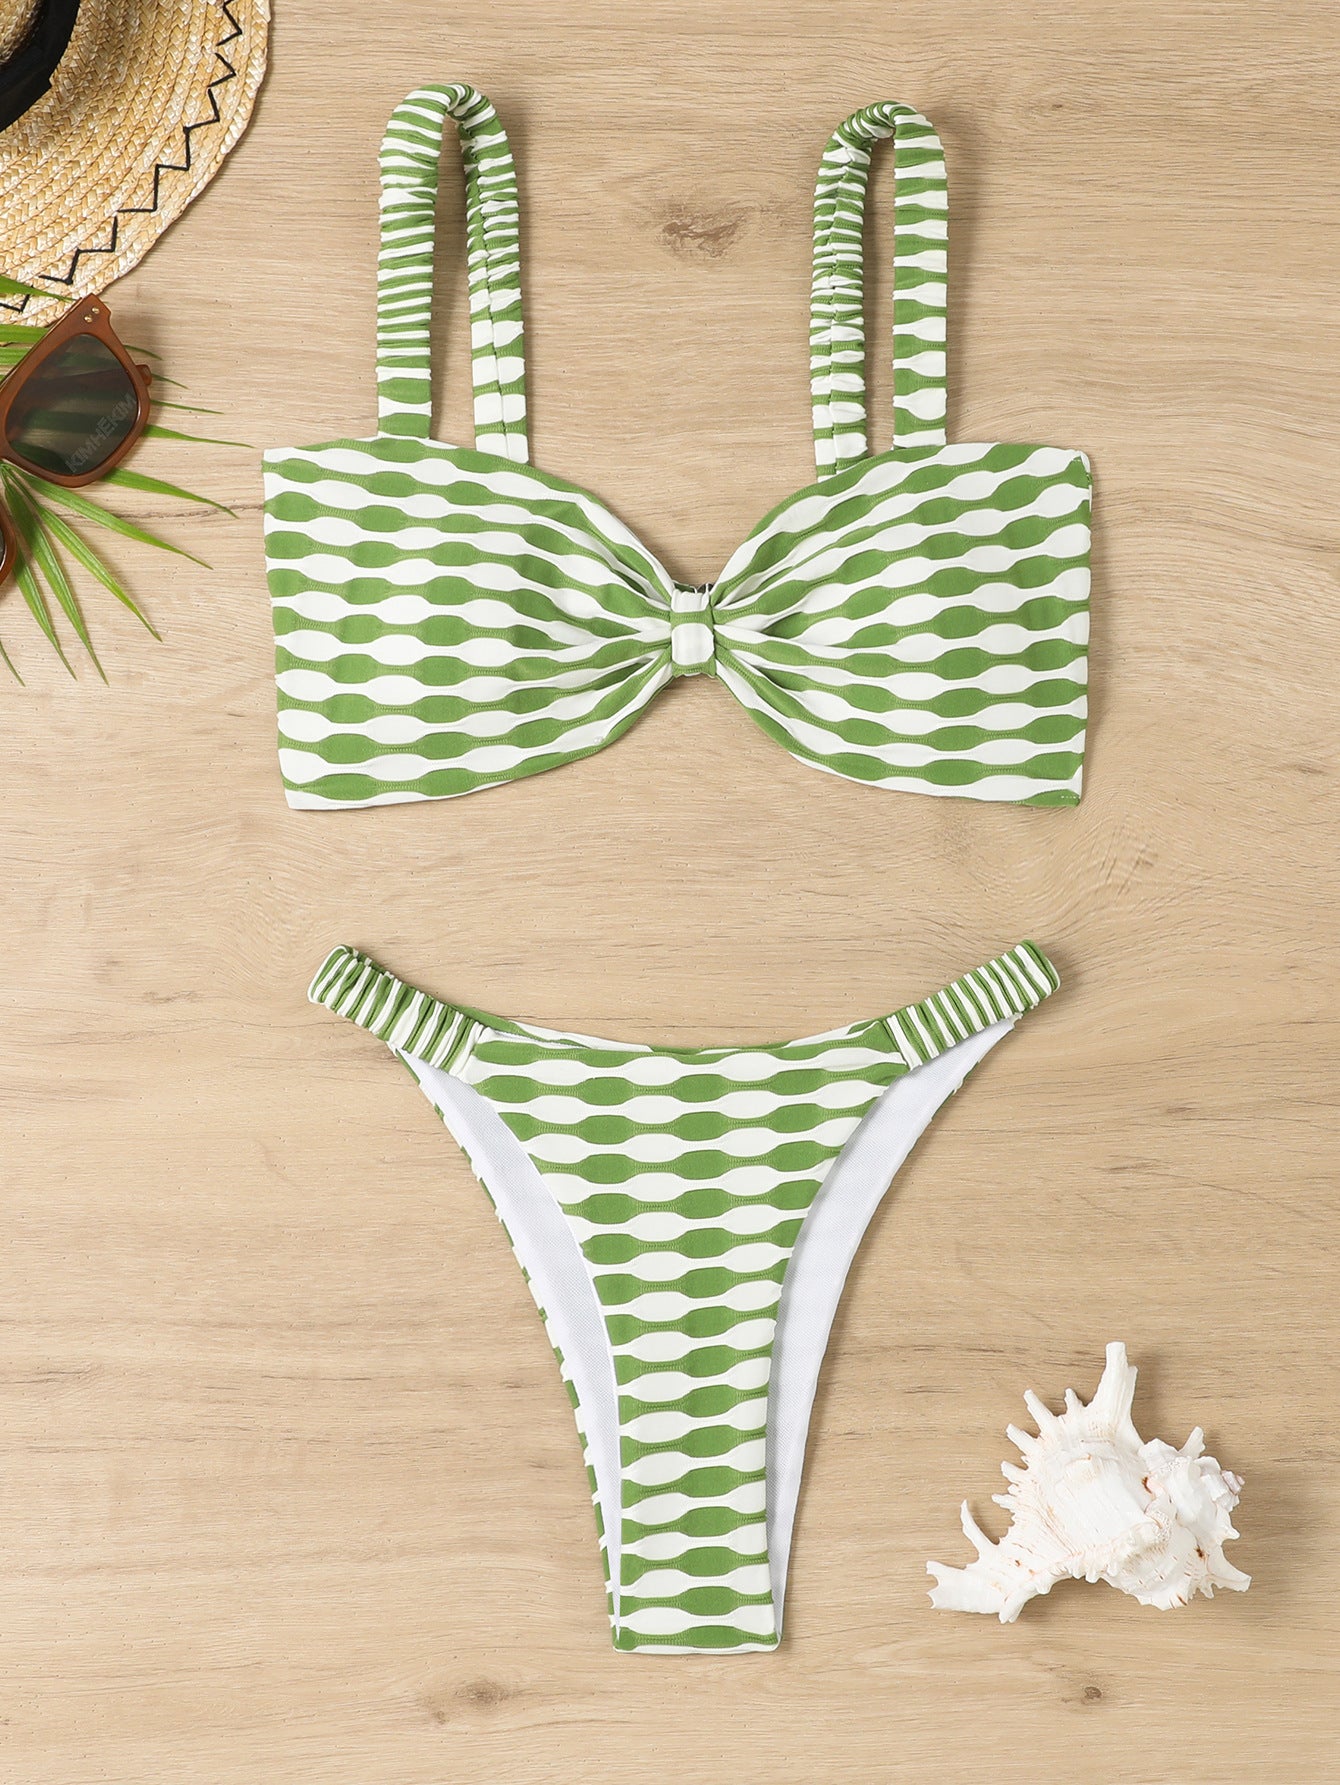 Sexy Striped Print Bikini Summer Beach Swimsuit Set Womens Clothing